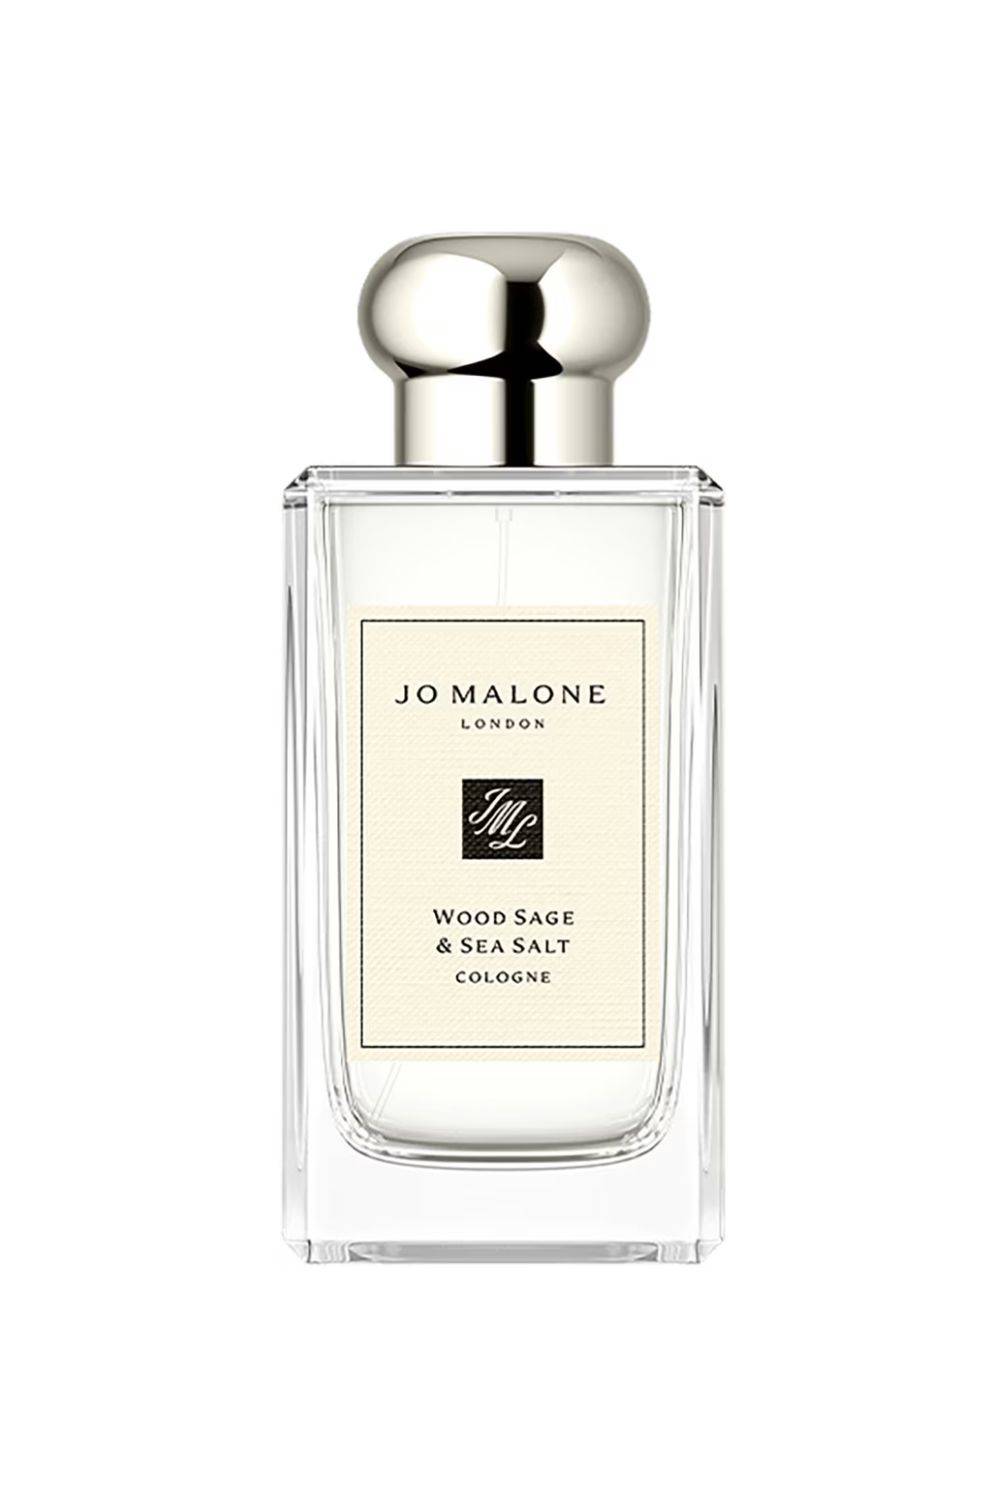 El perfume favorito de Meghan Markle: Wood Sage & Sea Salt de Jo Malone